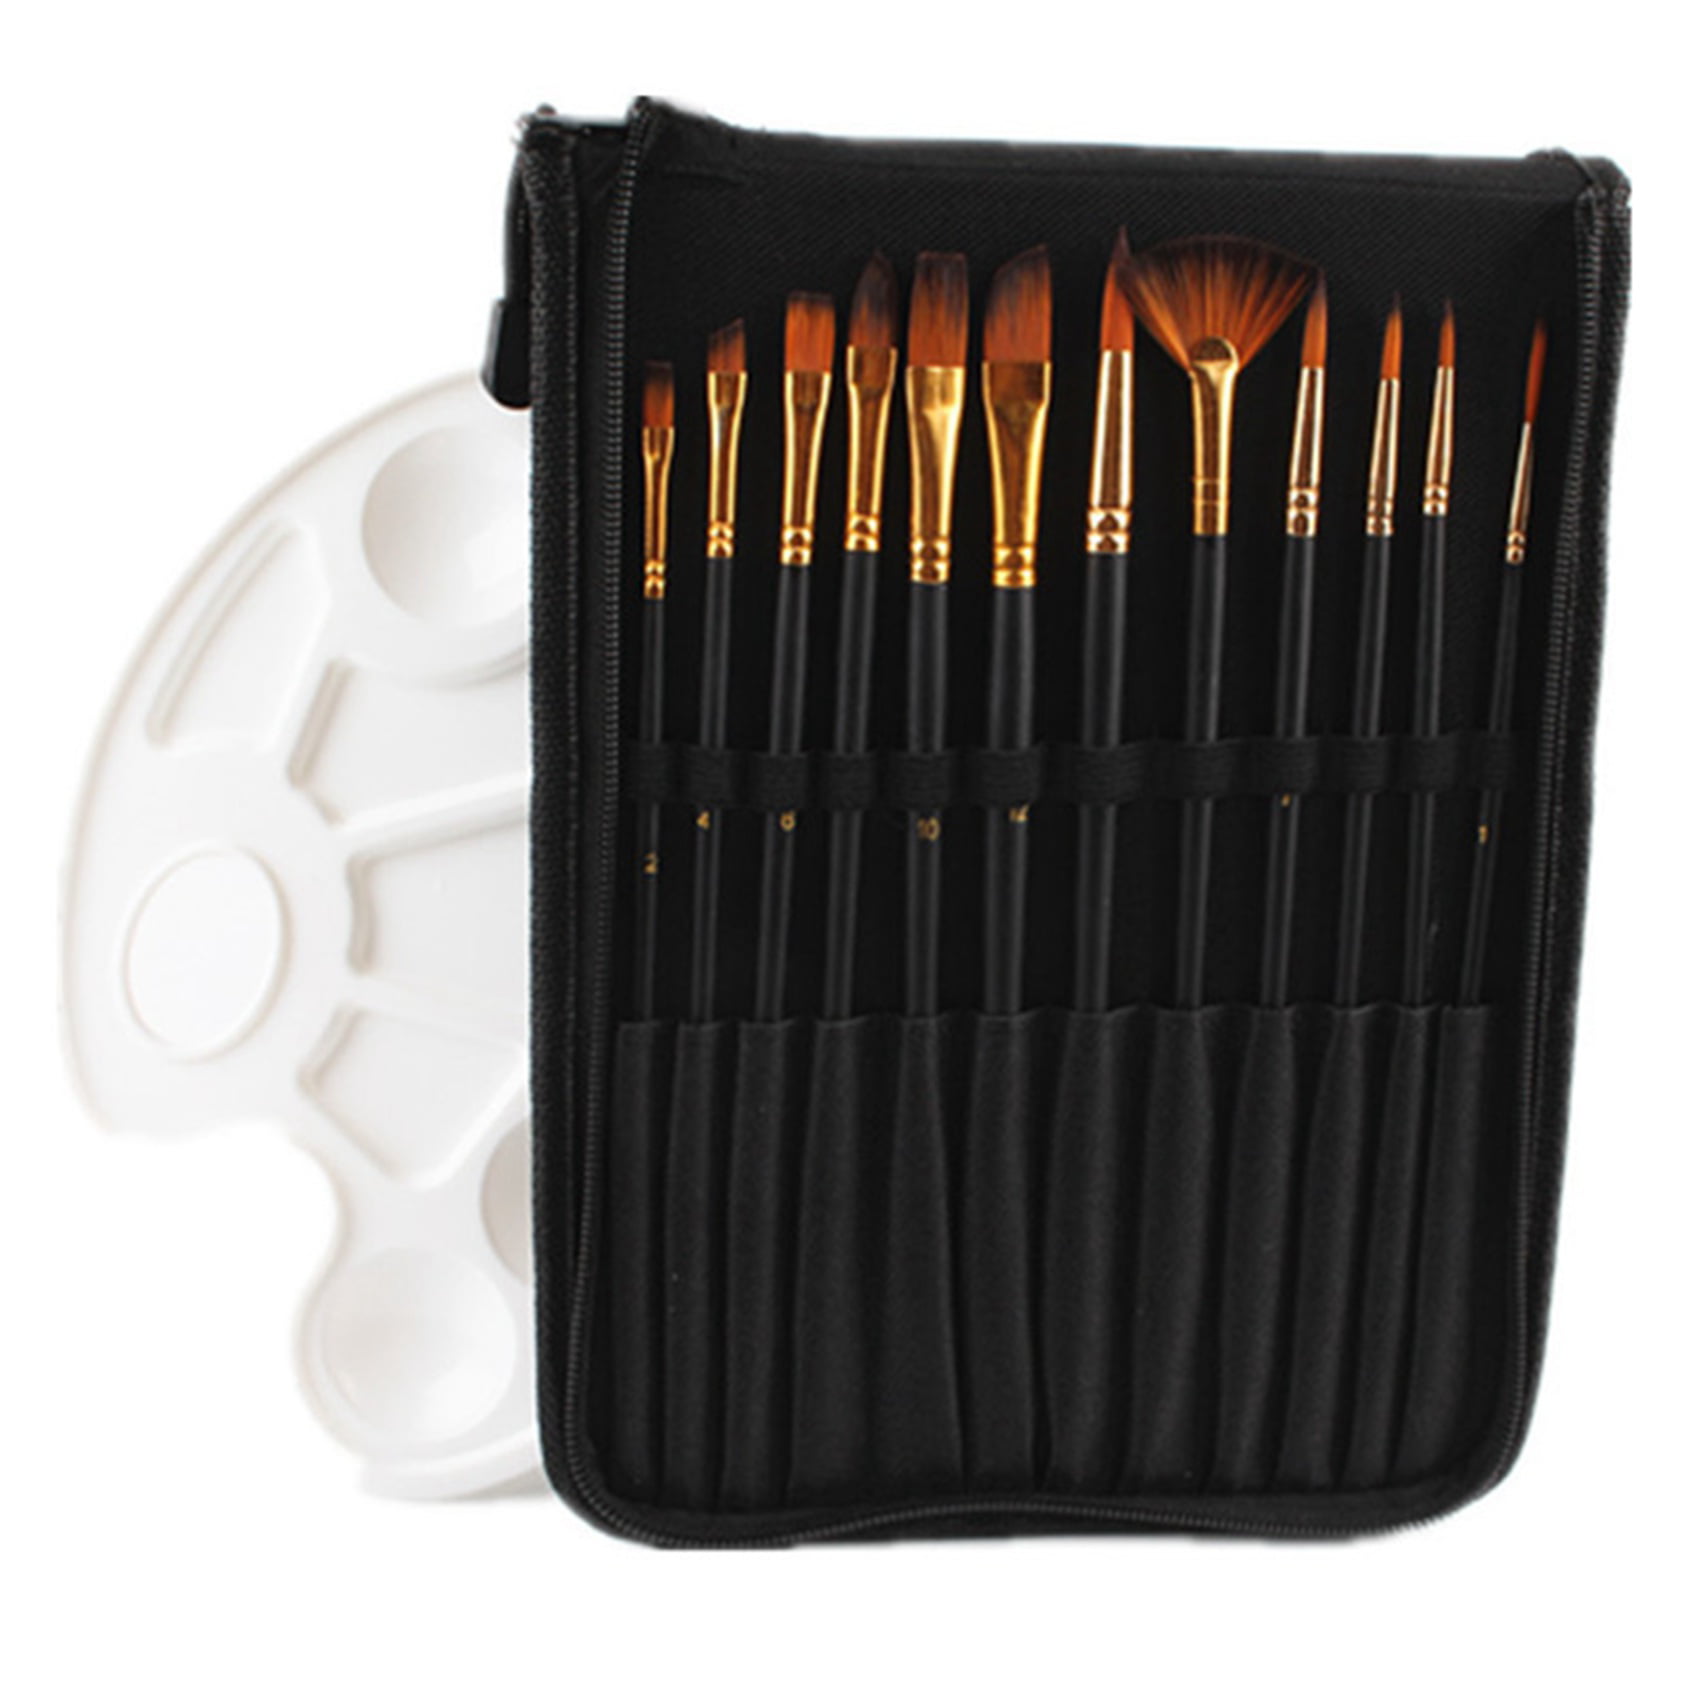 25 Pc Artist Paint Brush & Palette Knife Value Set Mixed Art Craft Brushes  9387